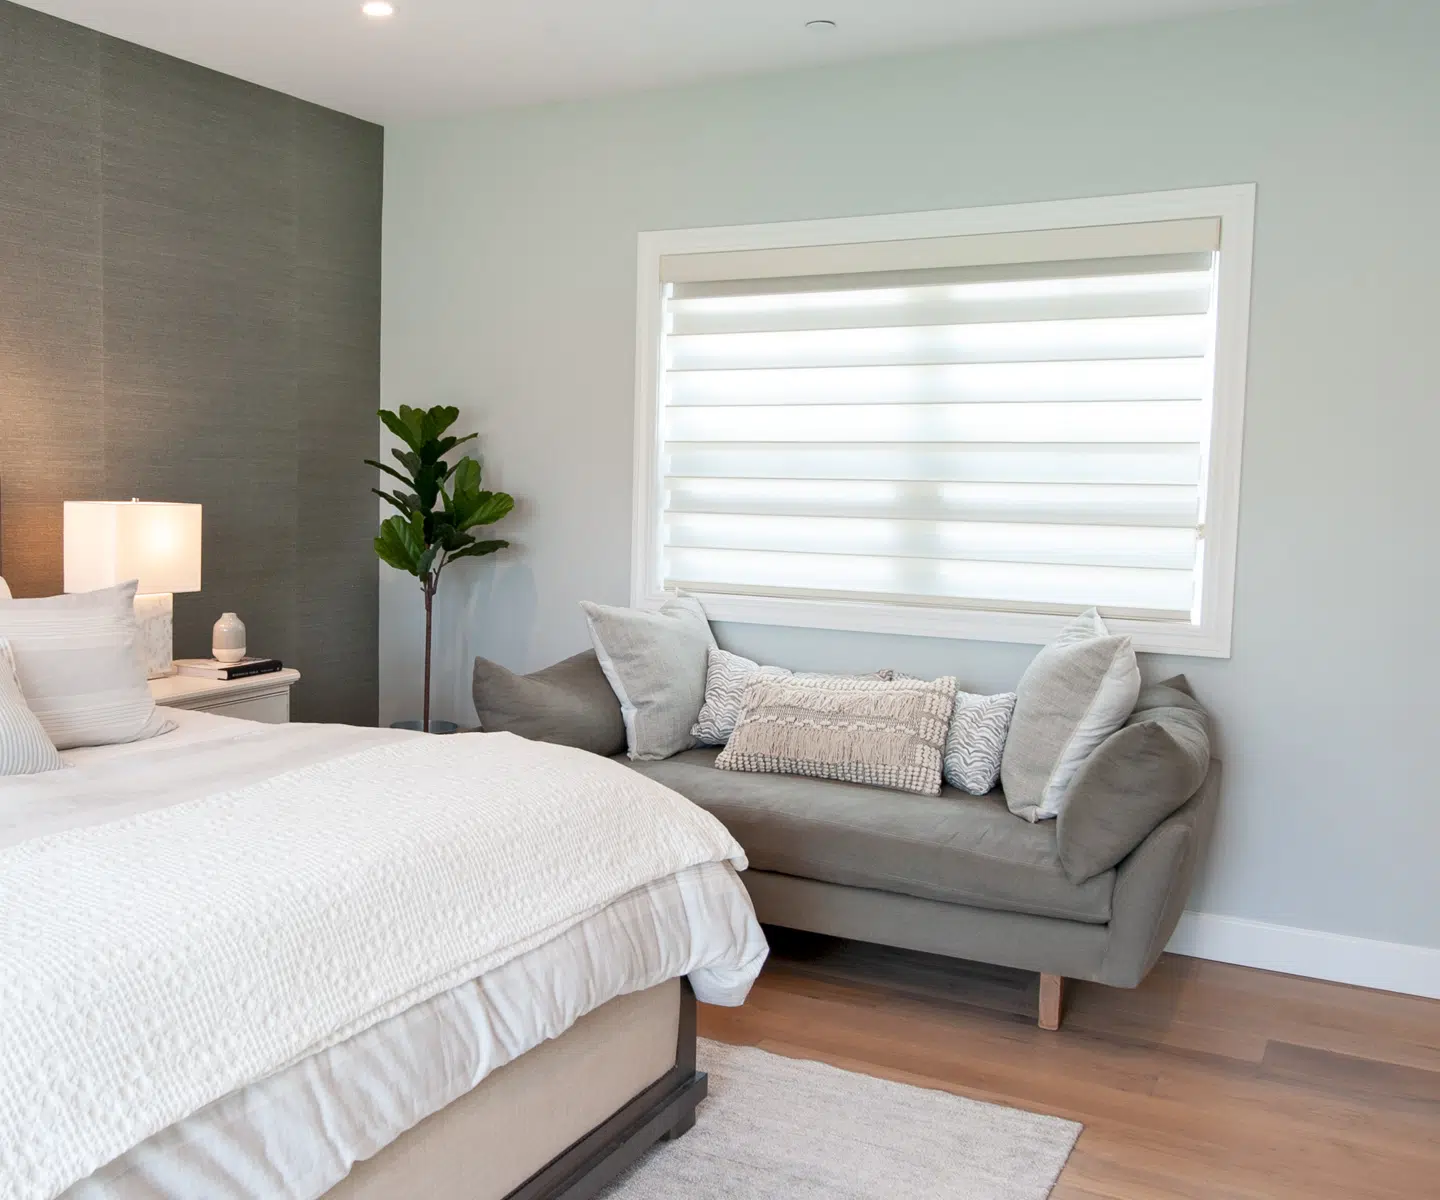 Near McLean, VA, an elegant bedroom with PerfectSheer shades